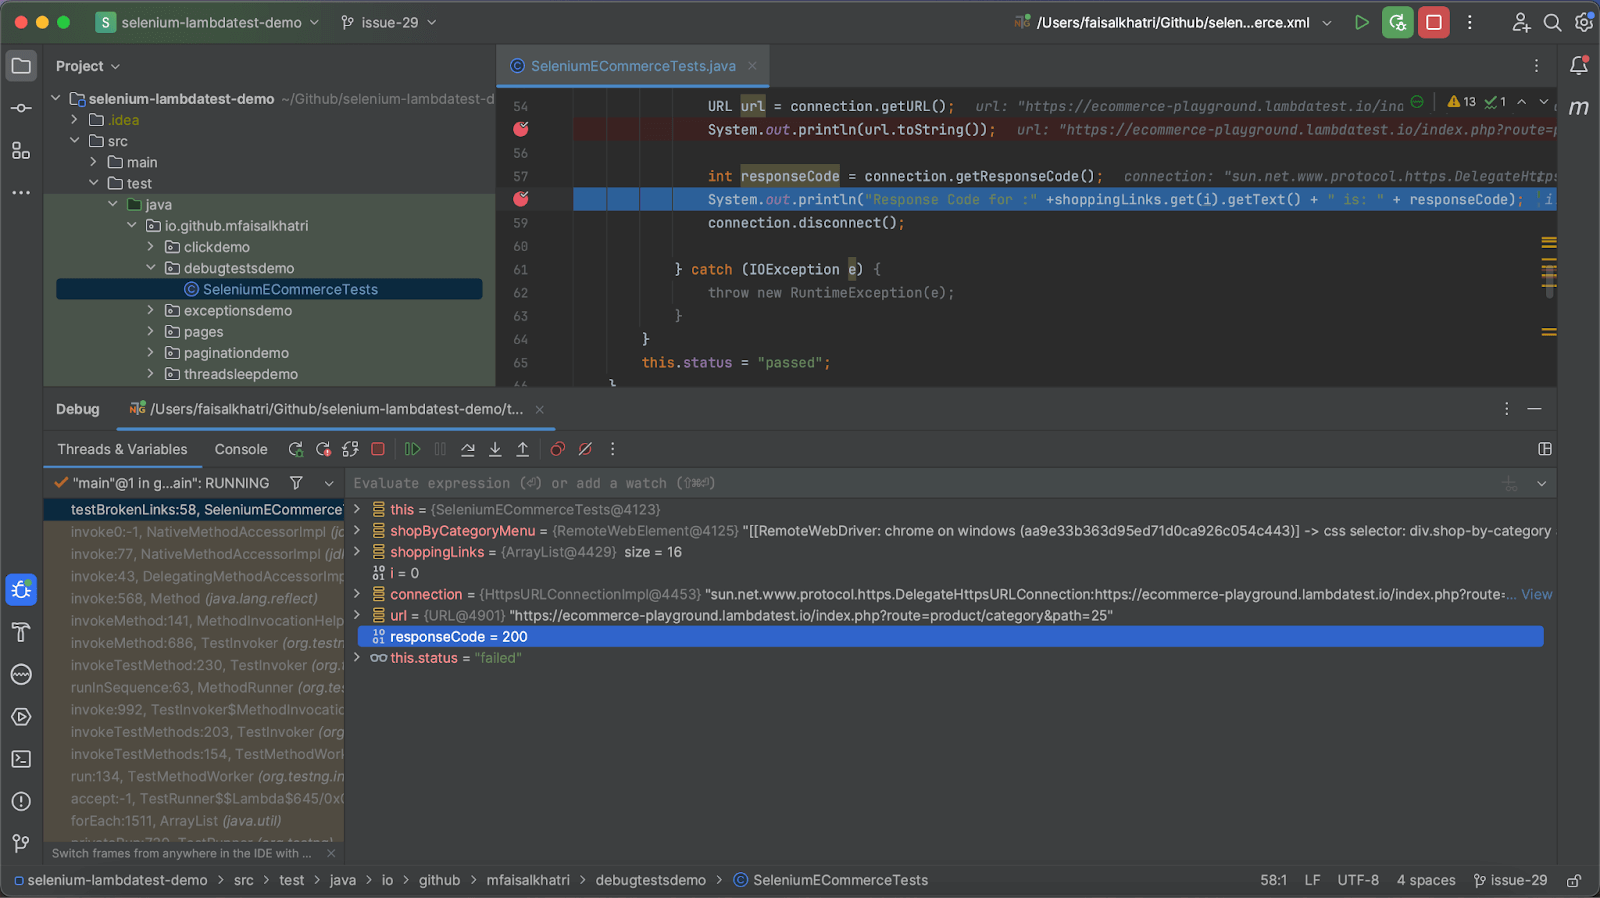 Screenshot showing debugging window with URL visible and response code 200 displayed